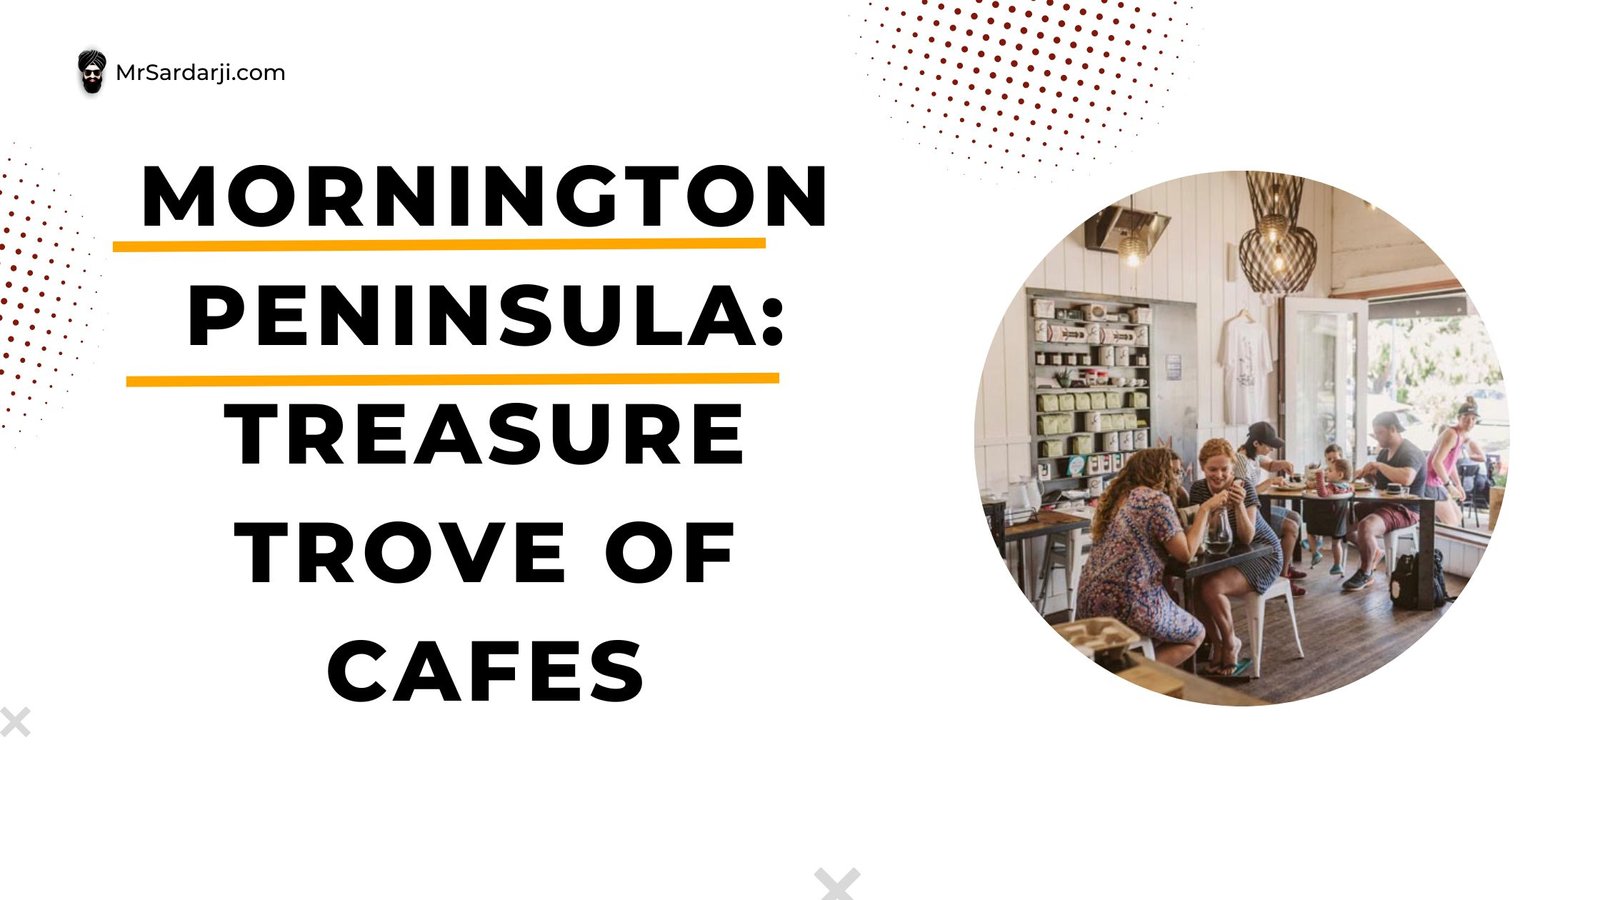 Mornington Peninsula: Treasure trove of Cafes